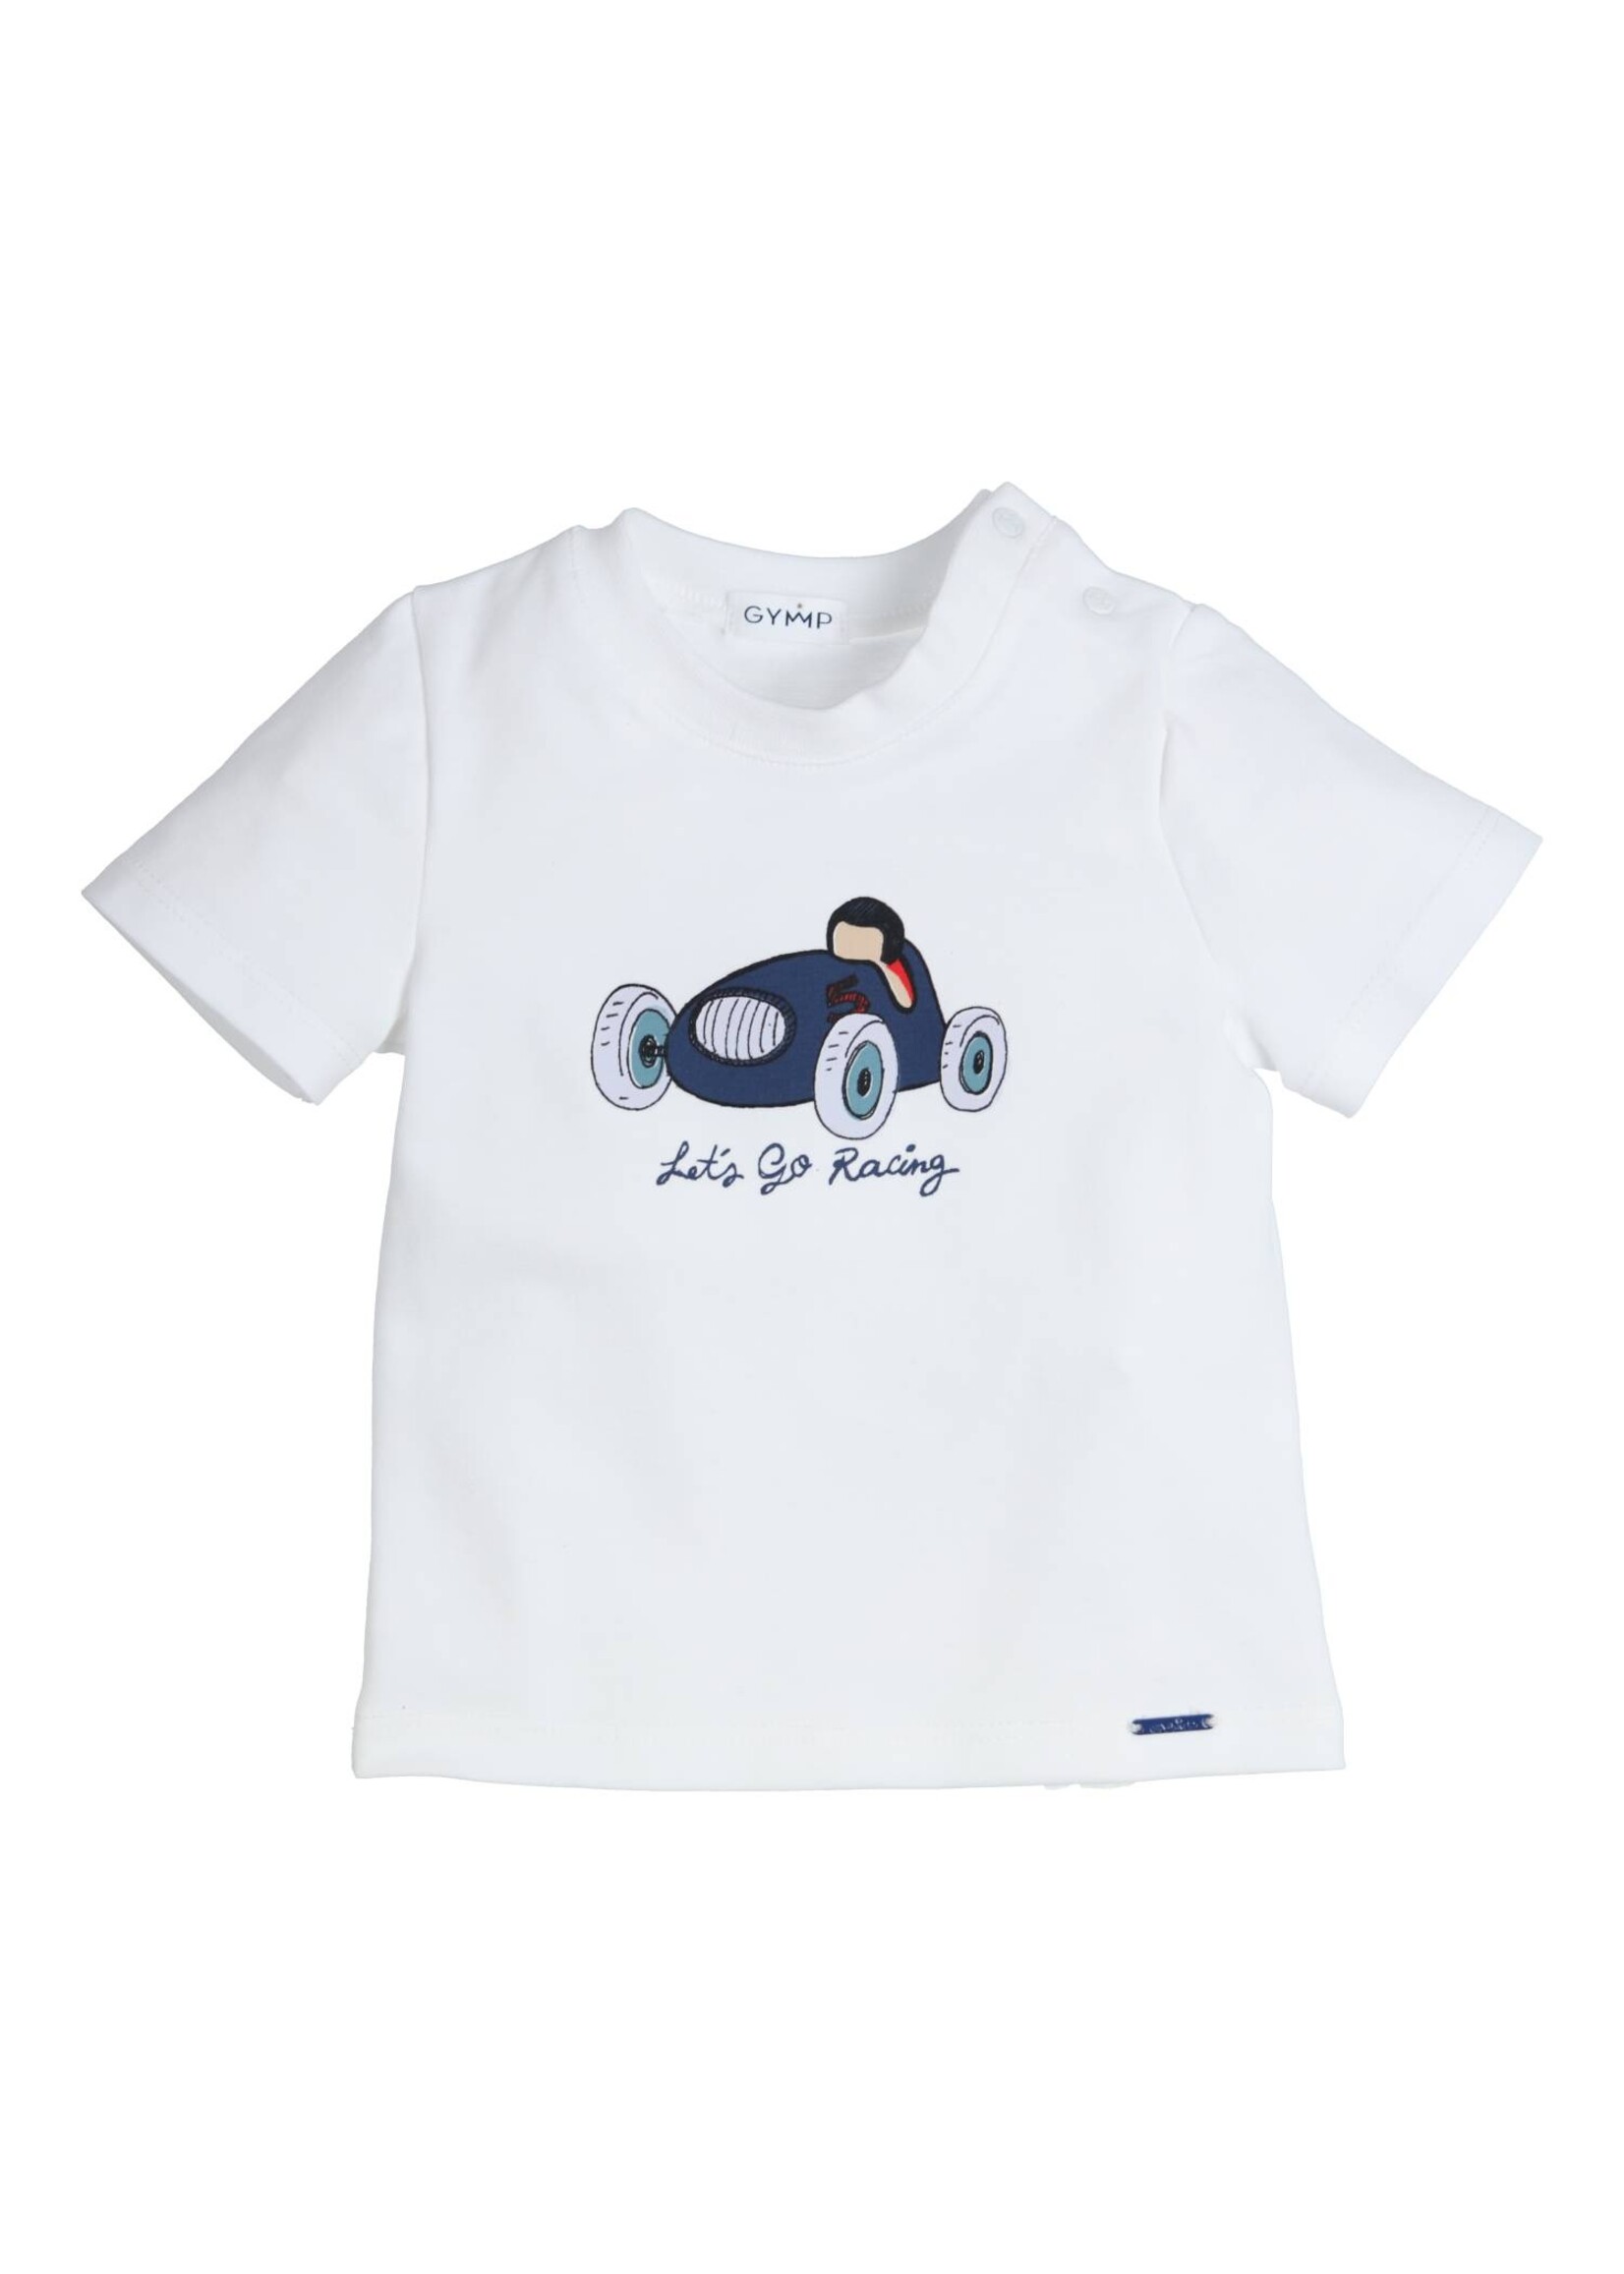 Gymp Boys T-shirt Aerobic Let's go racing 353-4443-20 White